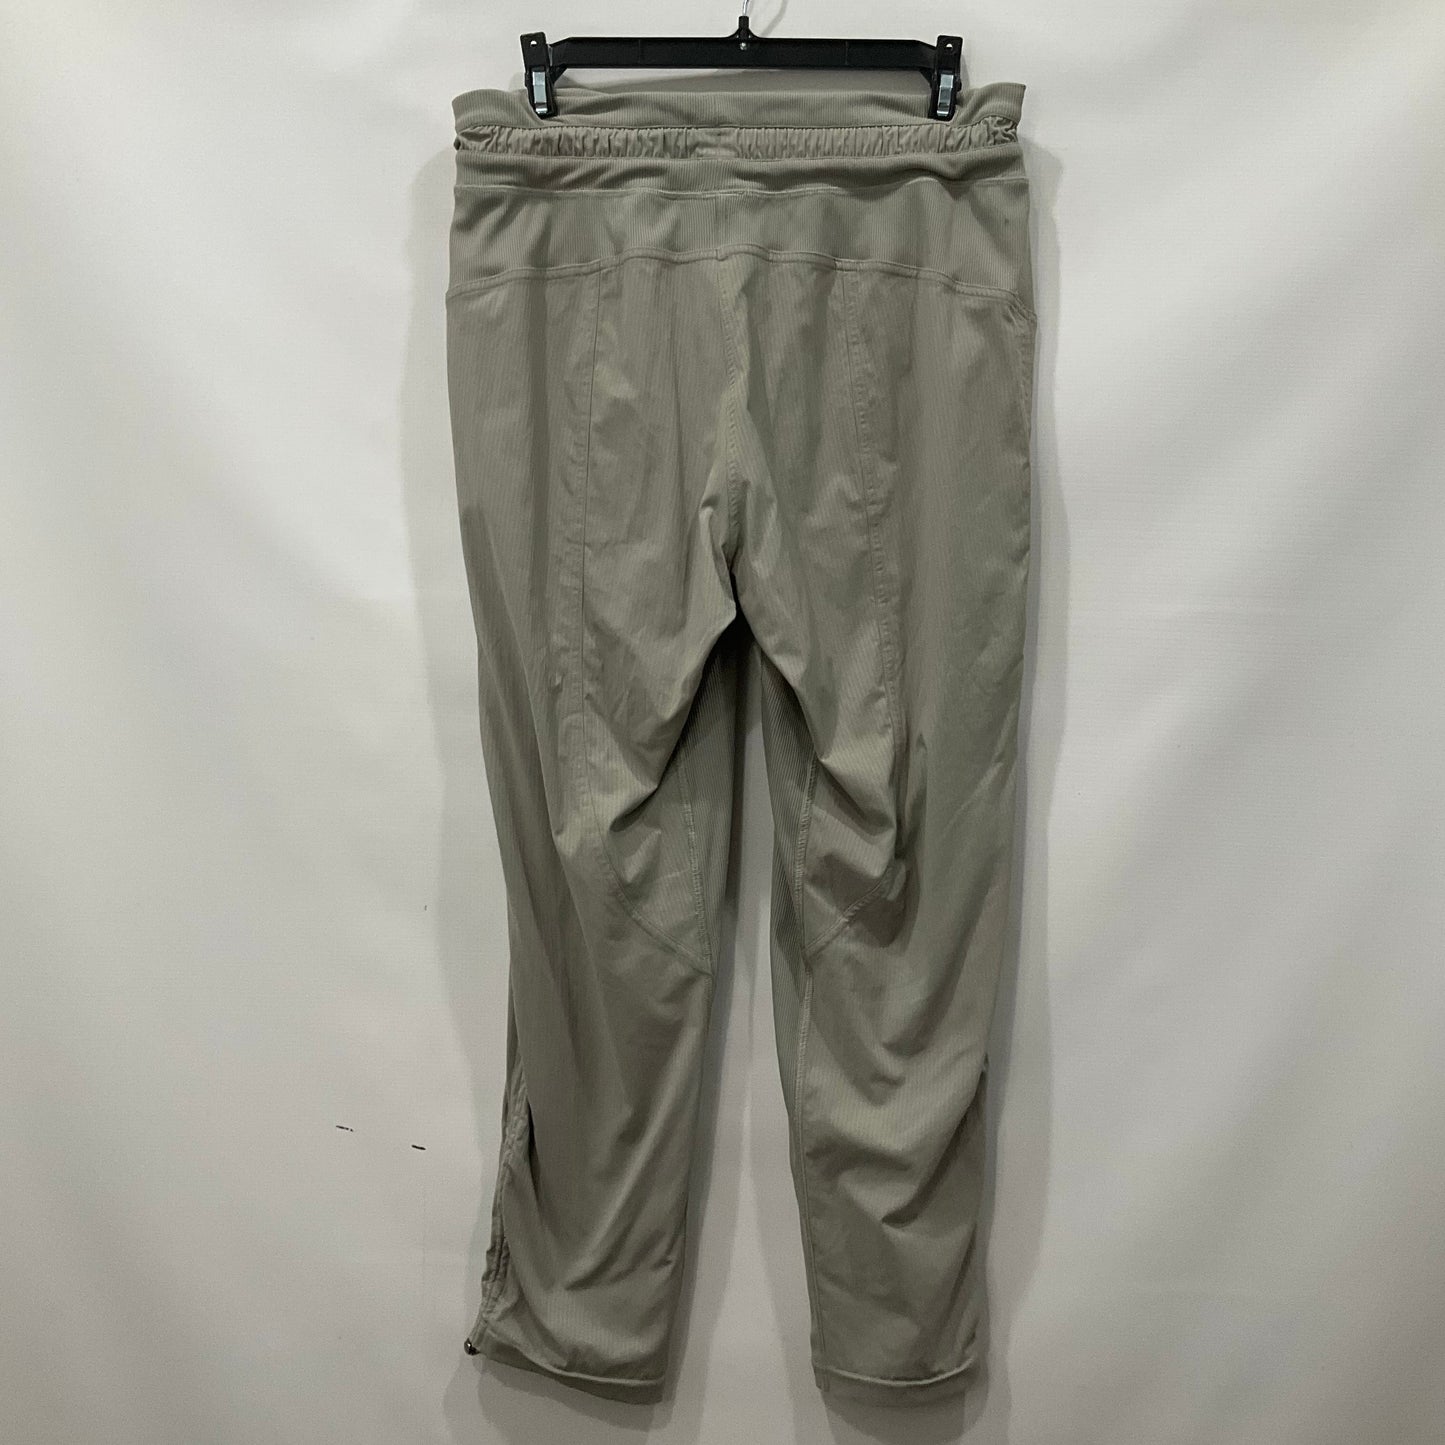 Brown Athletic Pants Lululemon, Size 6